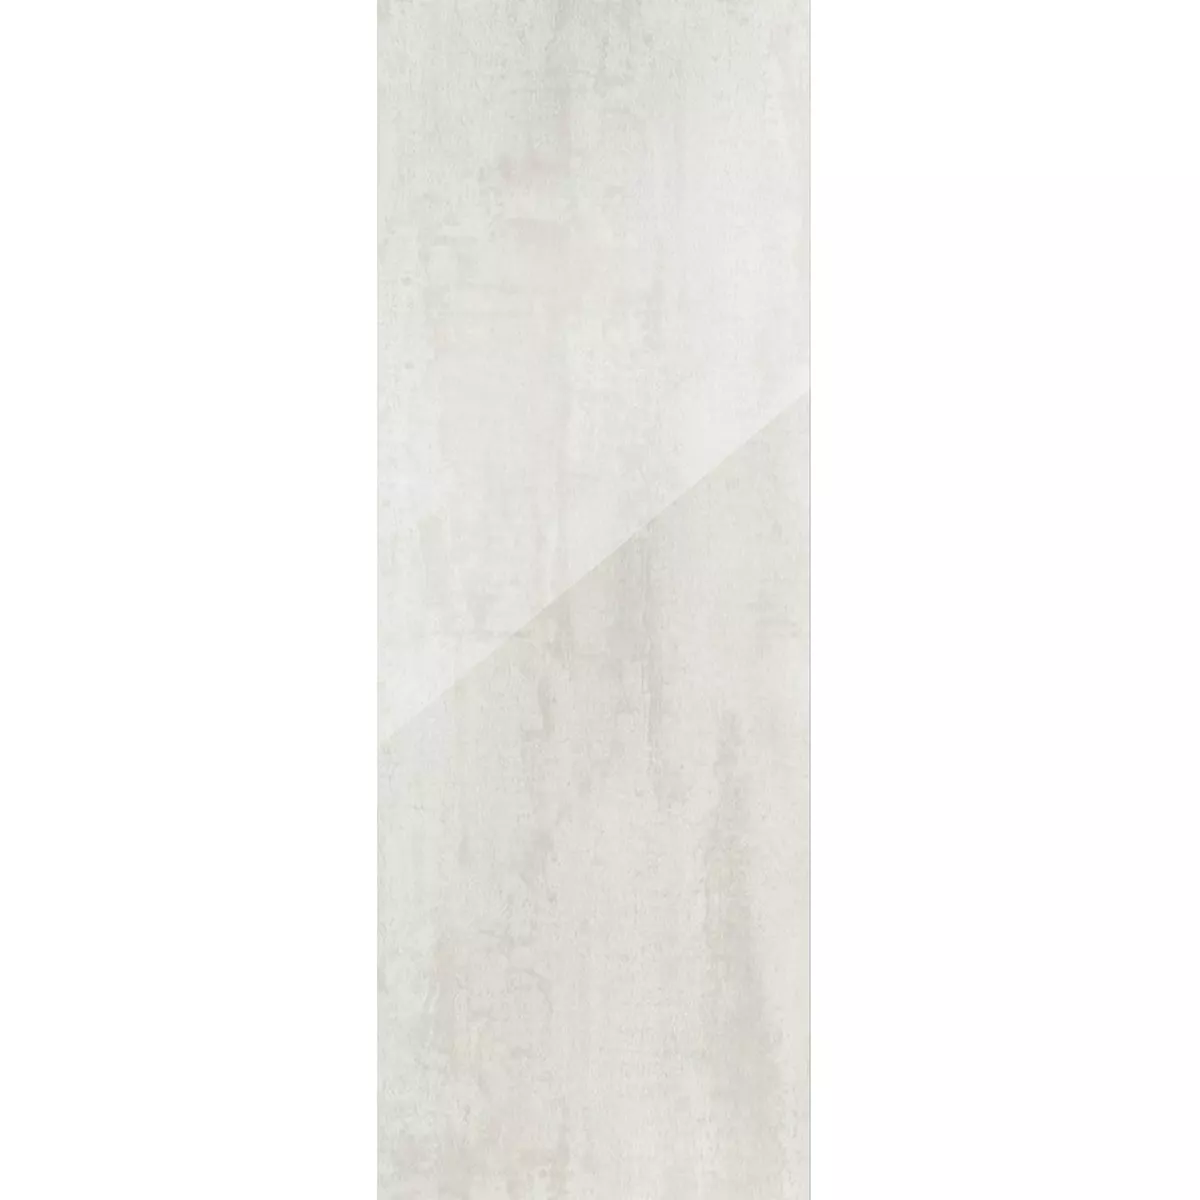 Bodenfliesen Herion Metalloptik Lappato Blanco 45x90cm